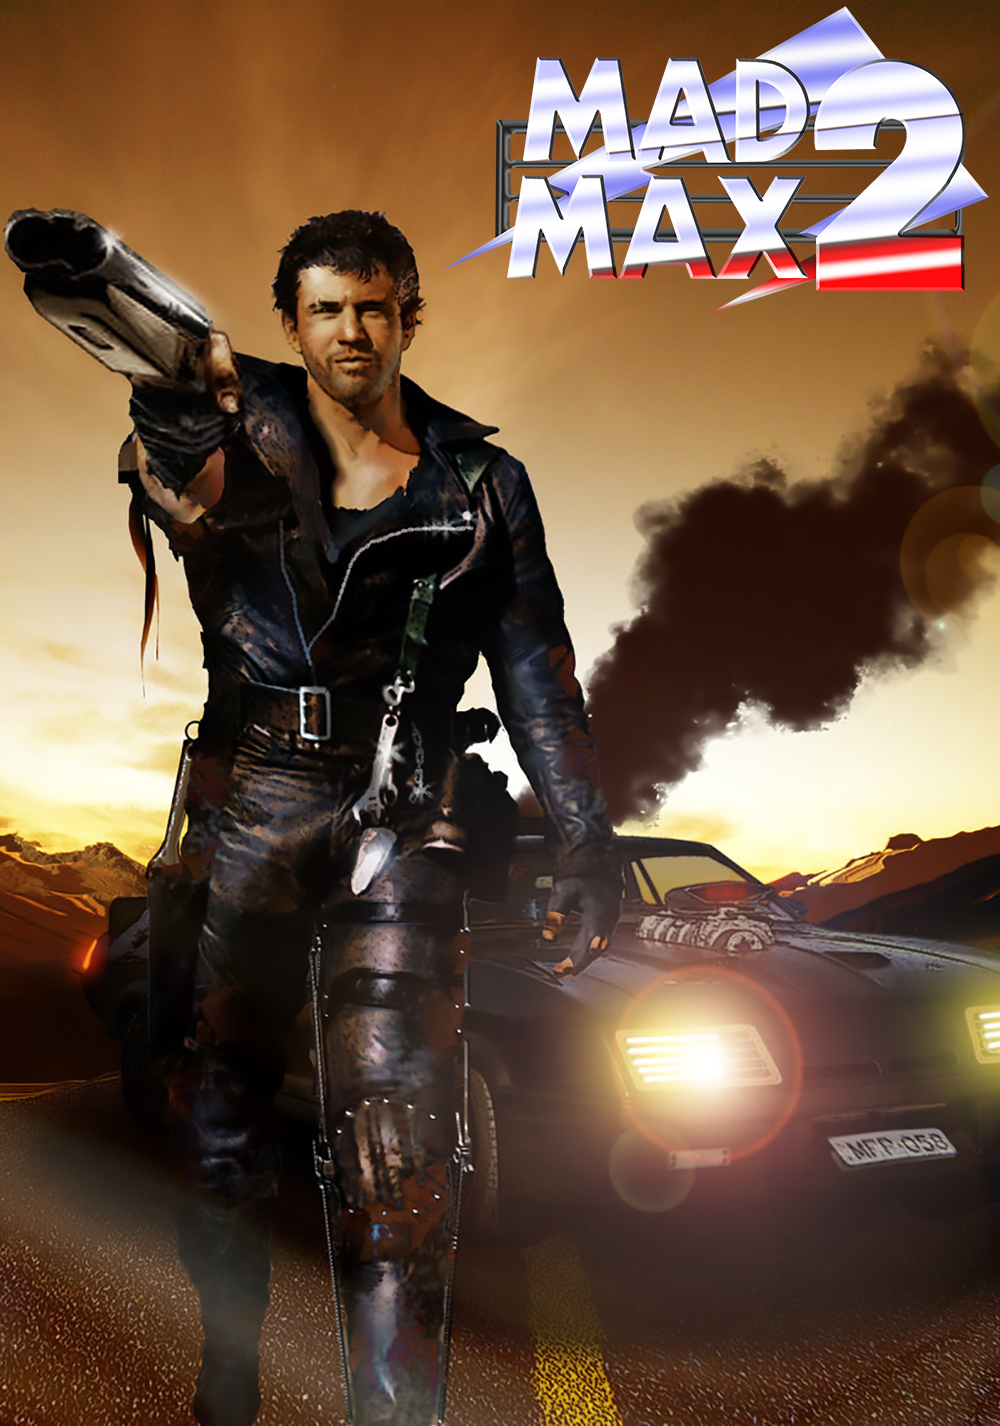 mad max 2 full movie online free